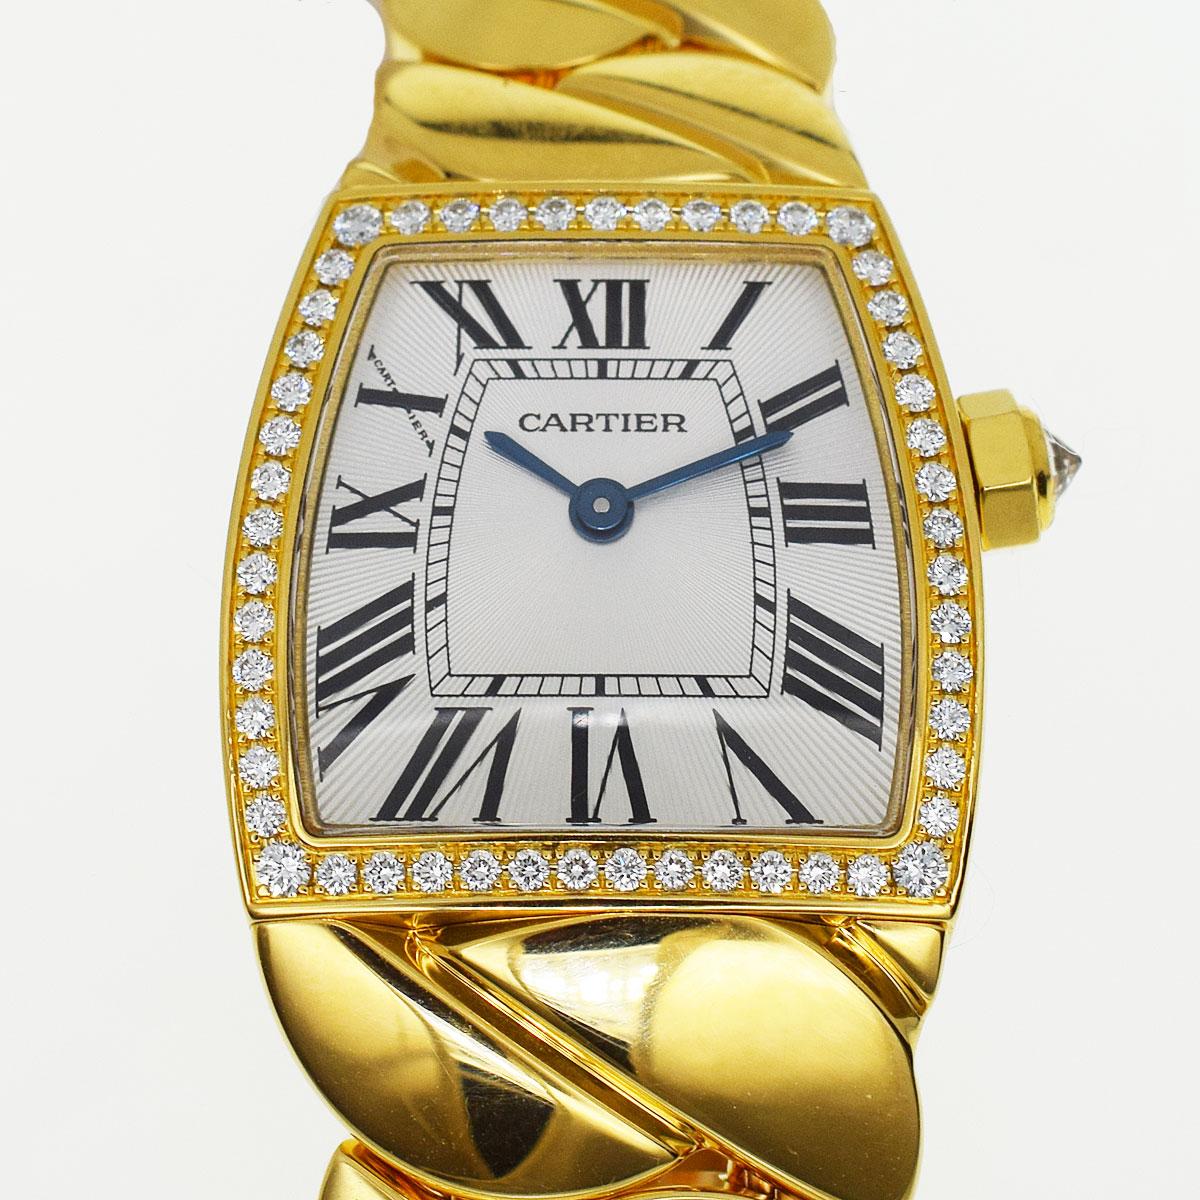 Brand:Cartier
Name:La Dona Diamond bezel
Ref.:WE60040H
Material: Diamond, 750 K18 YG Yellow Gold
Band length(inch):14.5cm / 5.70